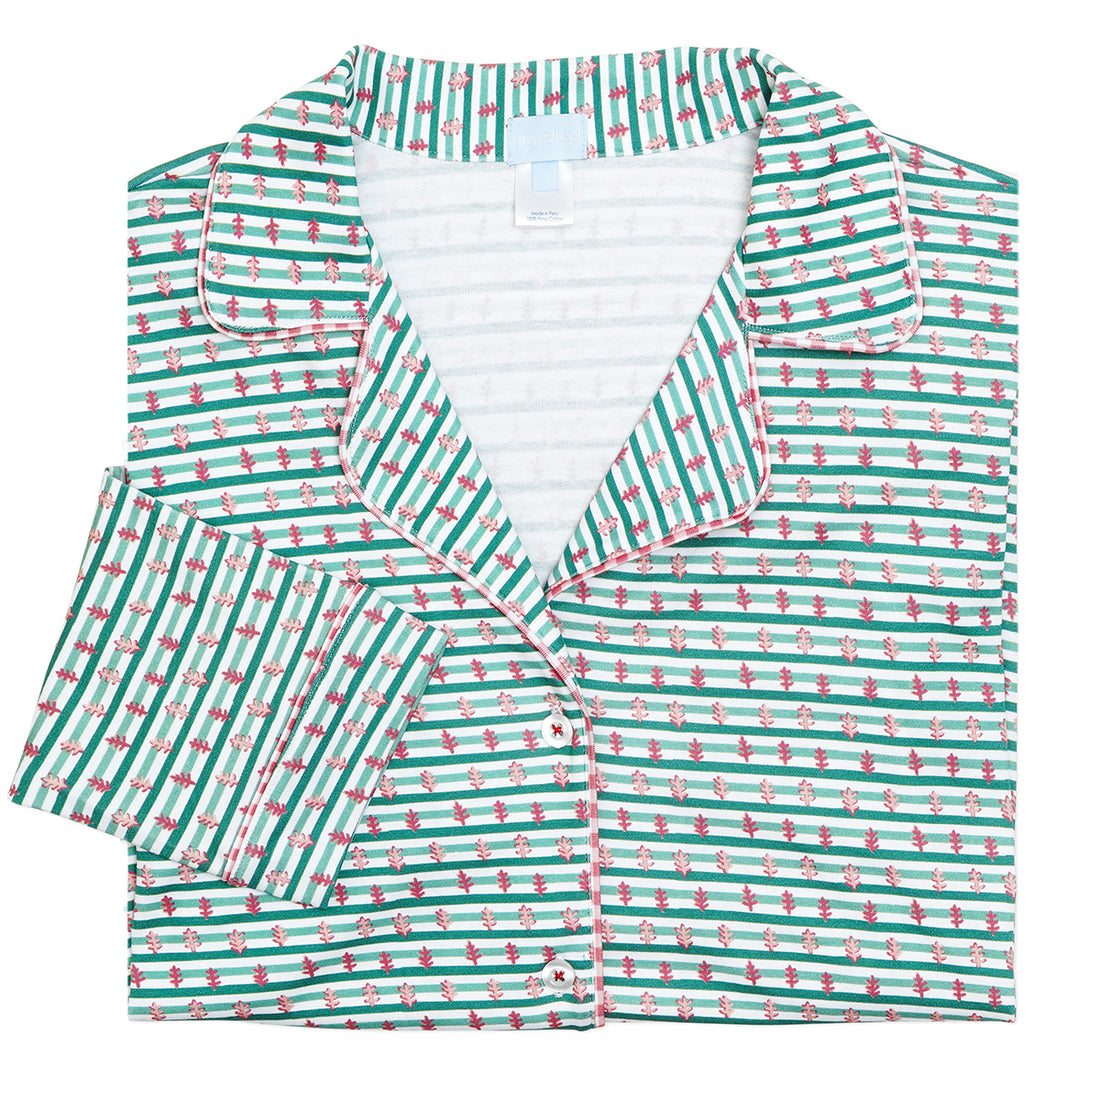 Joy Street Women's Balsam Fur Block Print Christmas Button Front Long Pajama Top